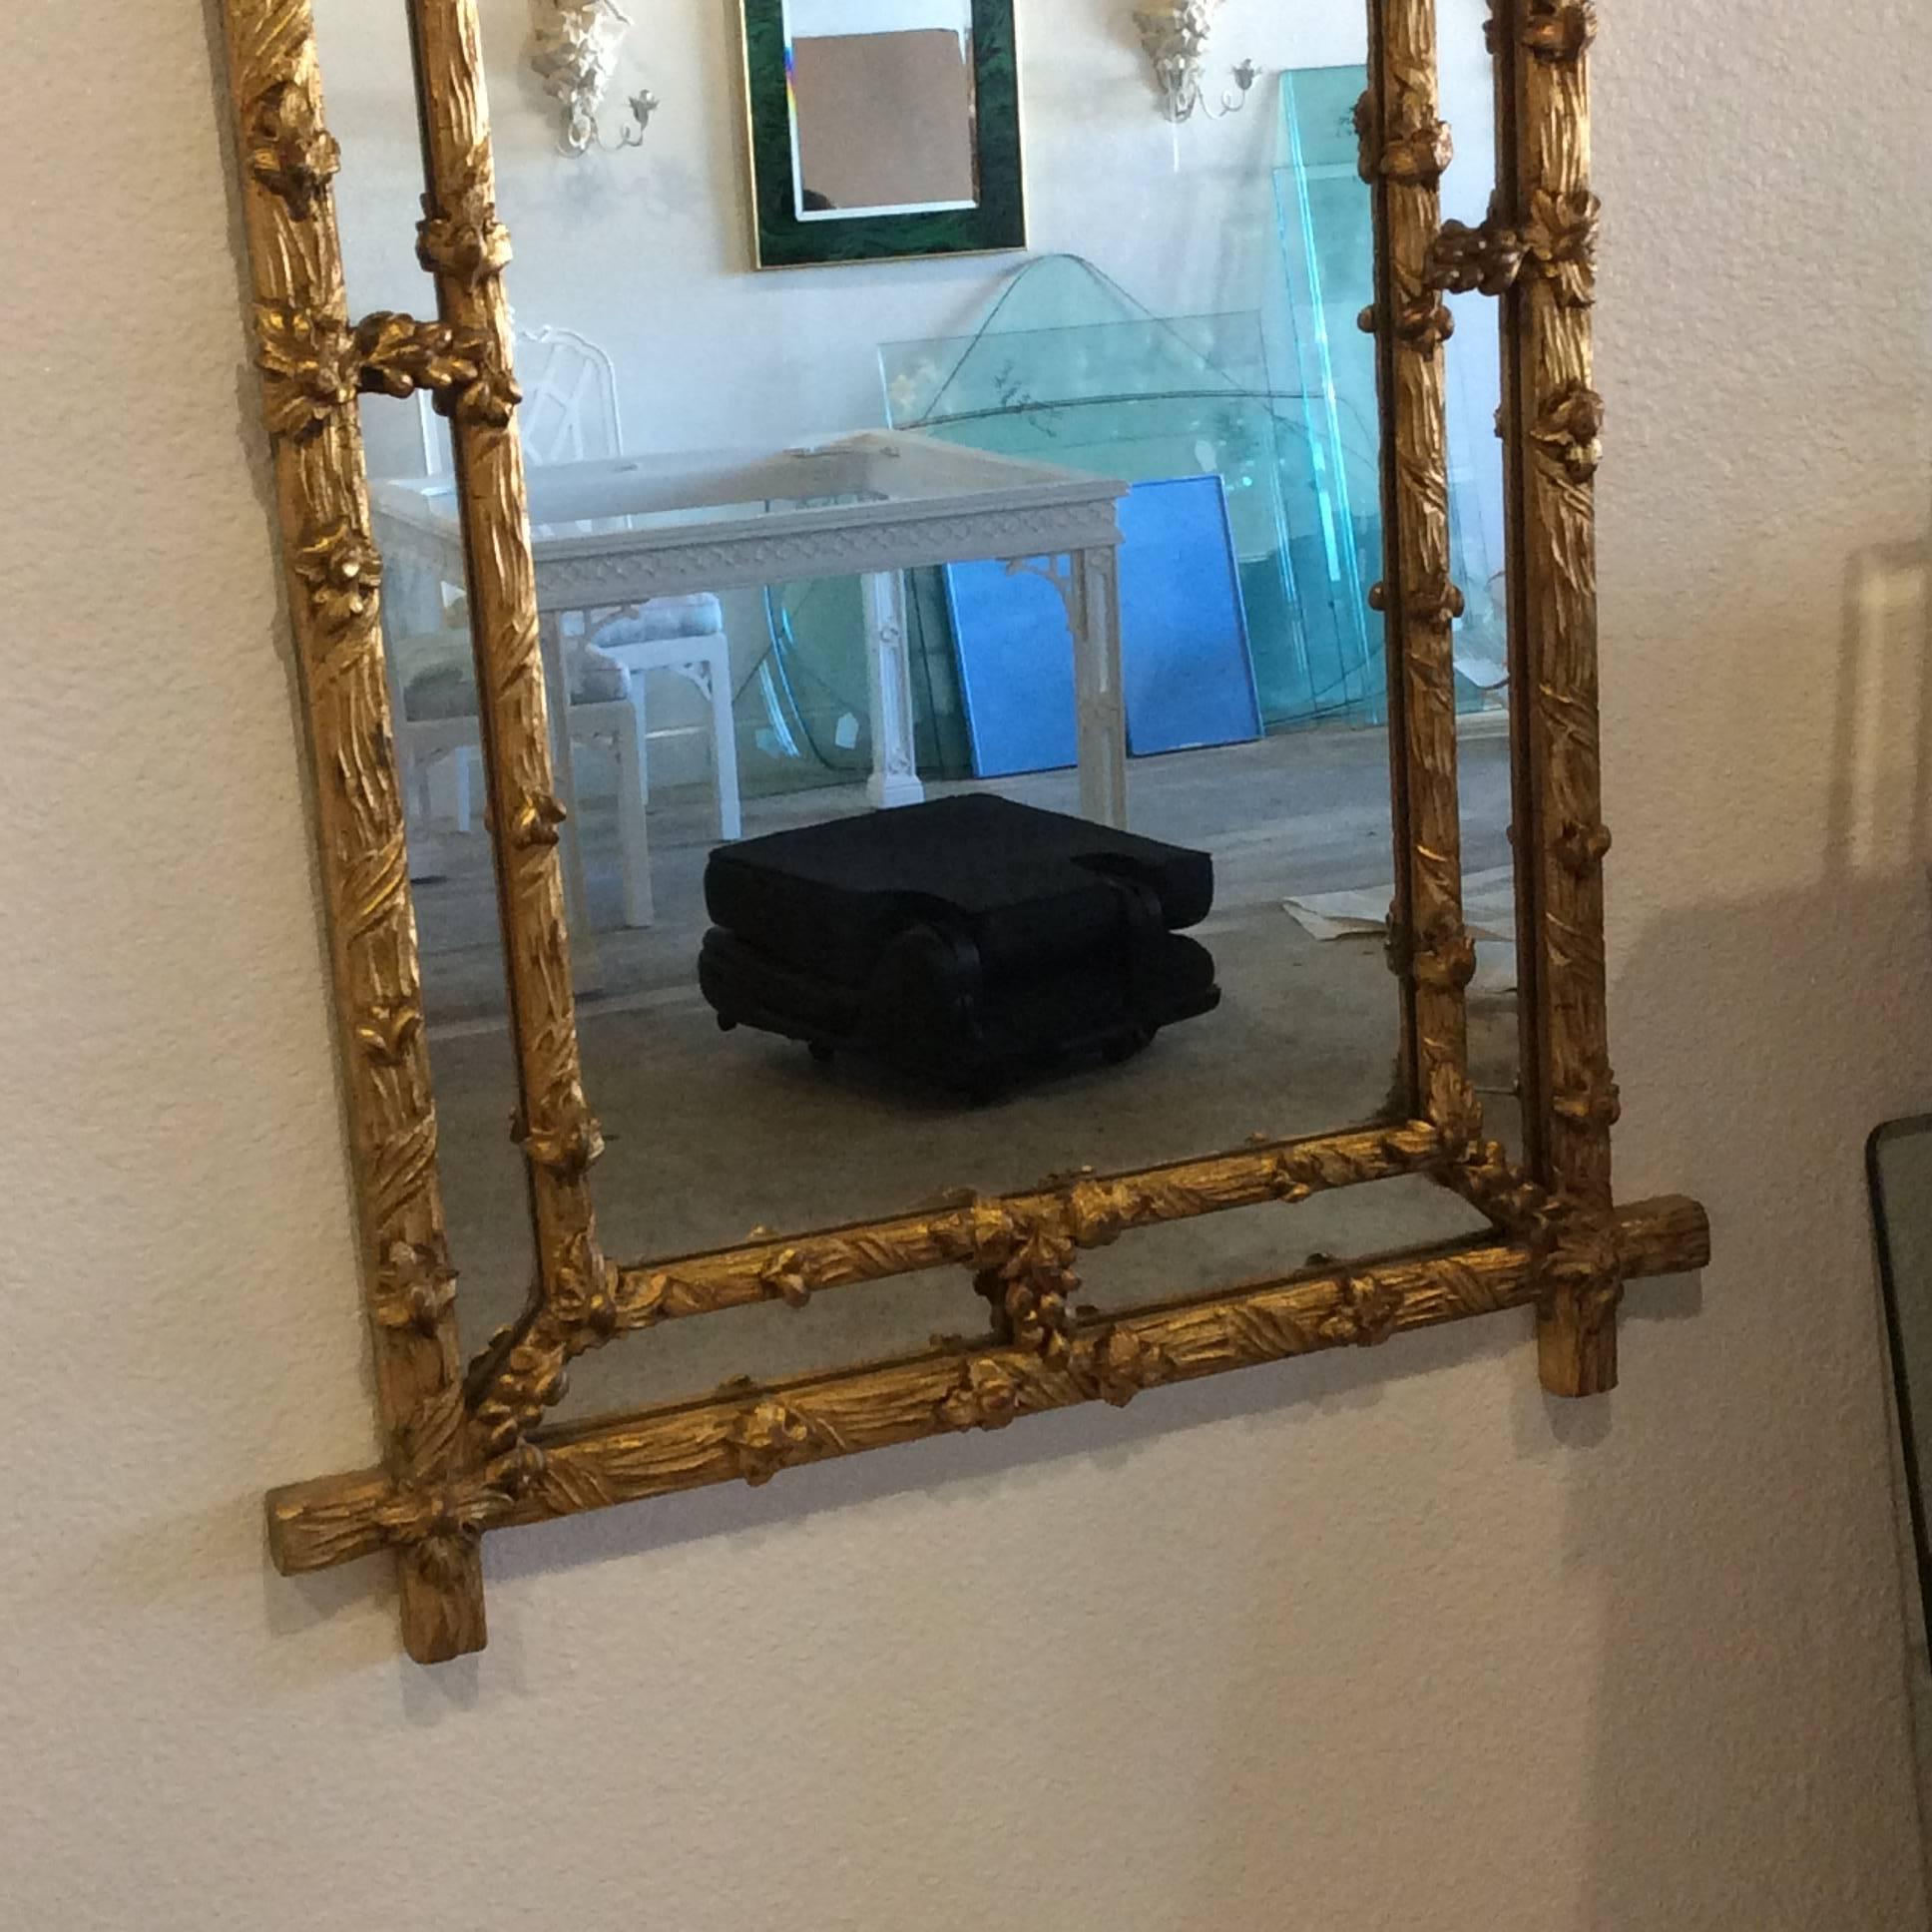 gold vintage mirror